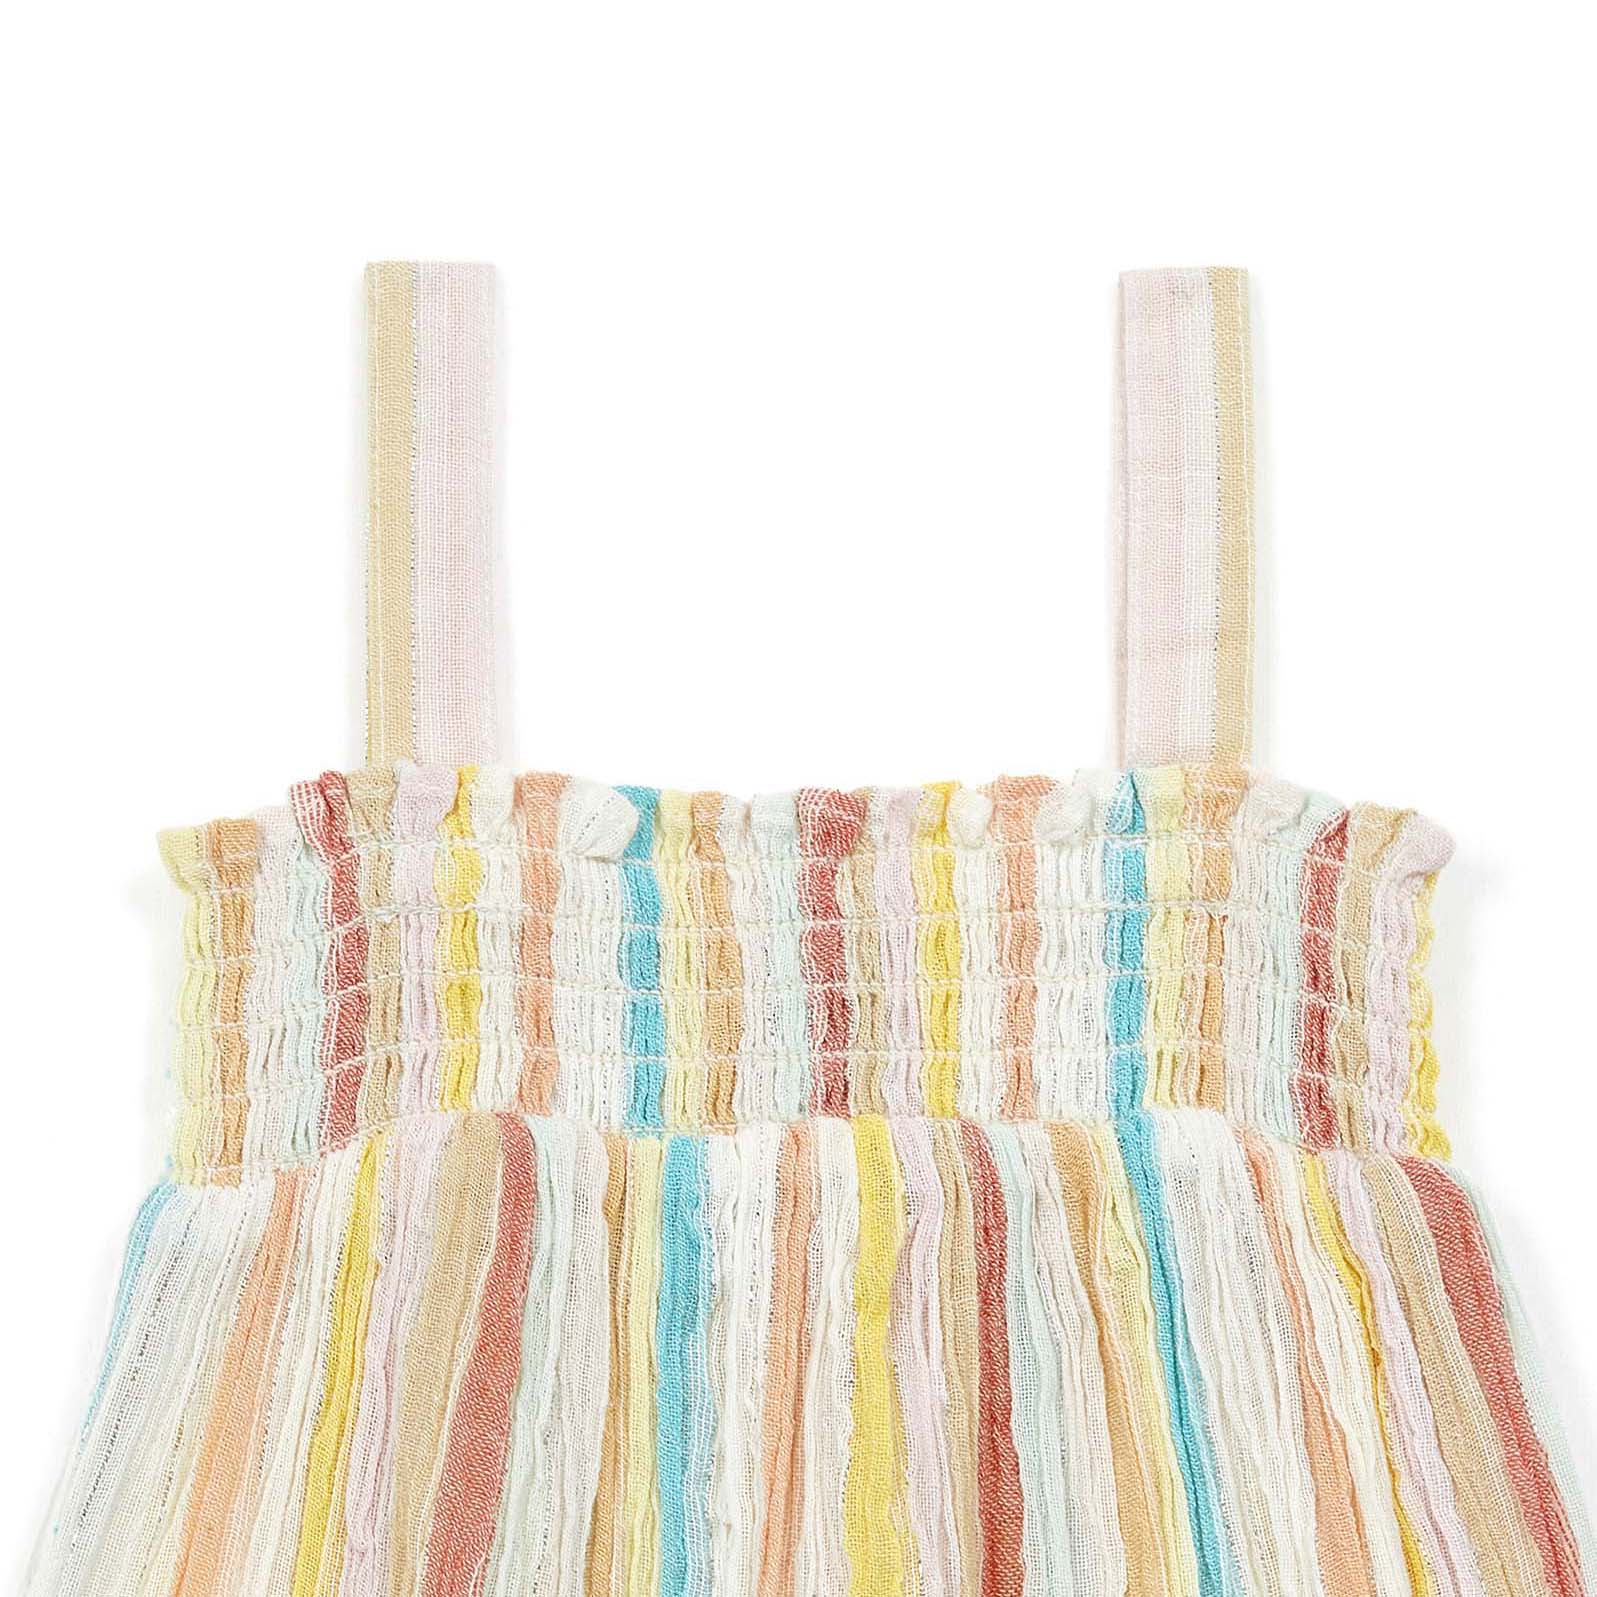 Baby Girls Multicolor Stripe Cotton Dress